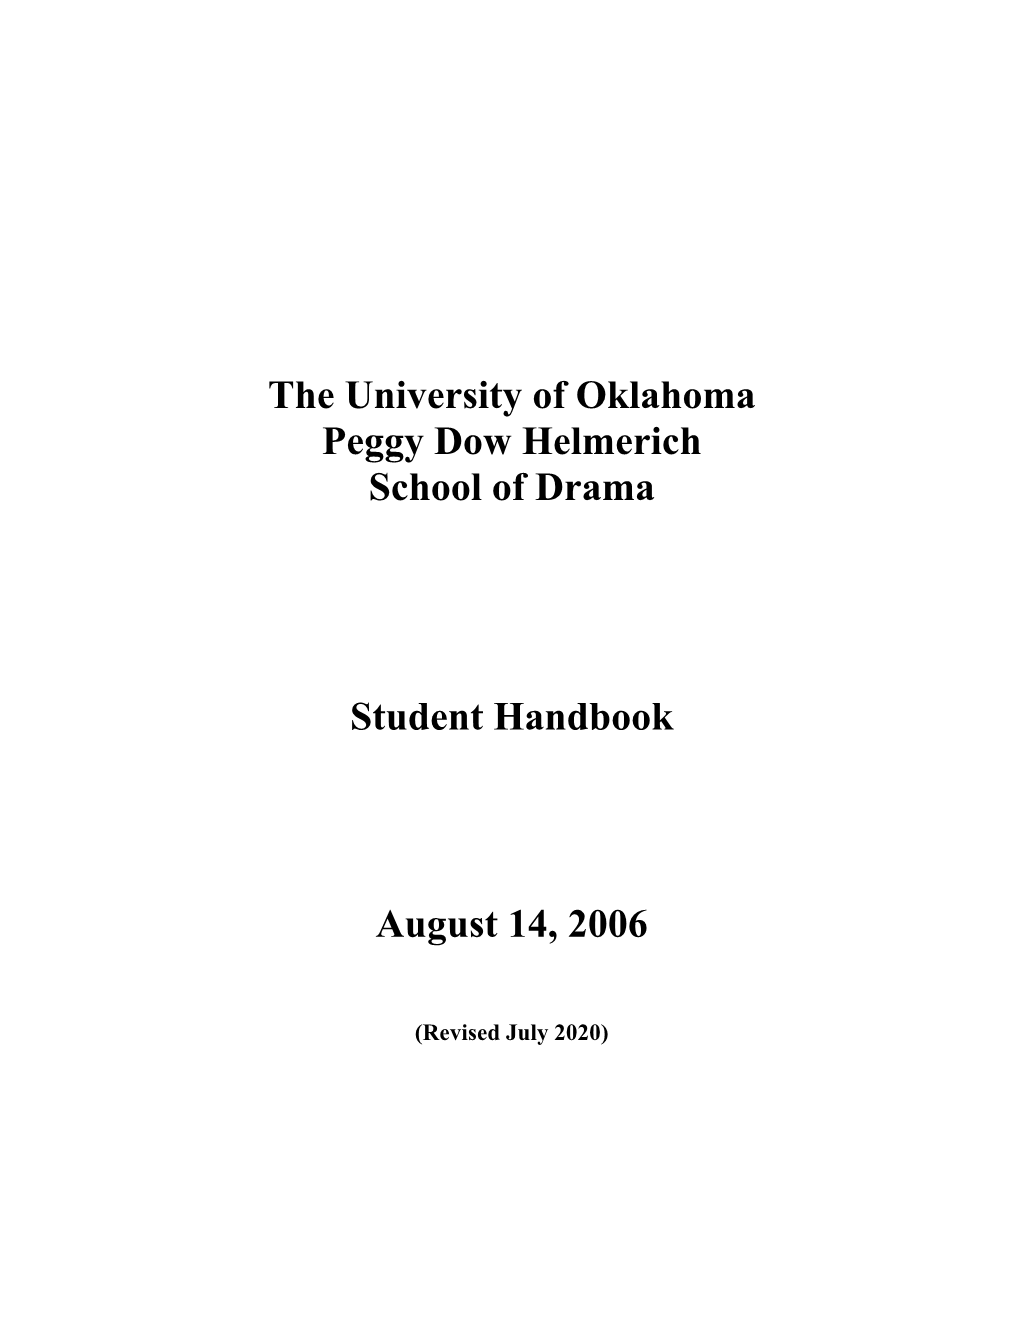 The University of Oklahoma Peggy Dow Helmerich School of Drama